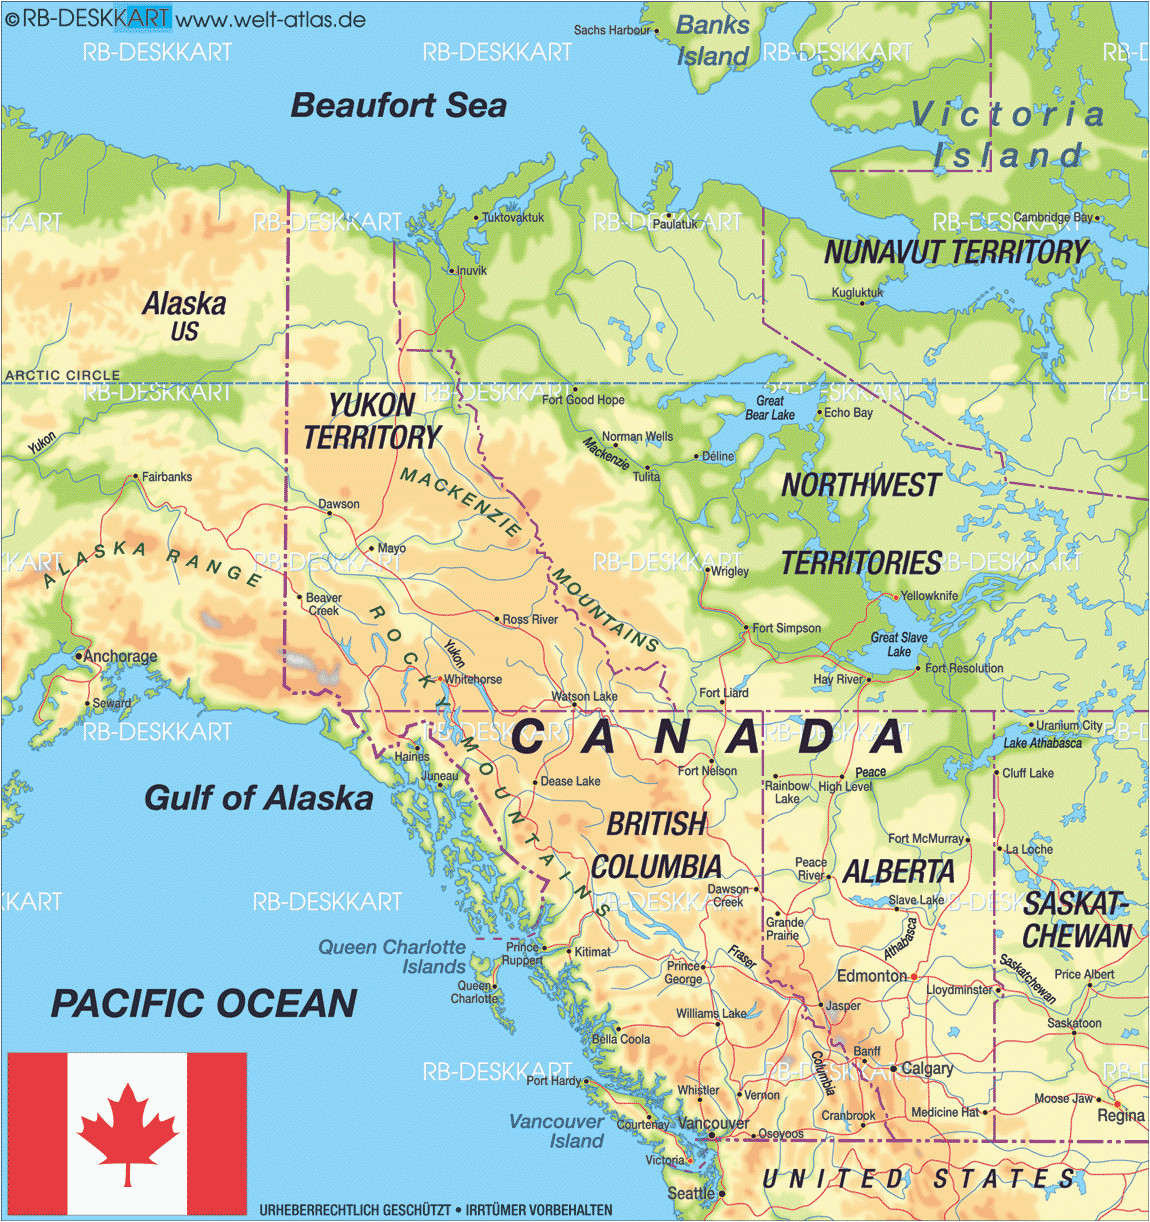 karte von kanada west region in kanada welt atlas de